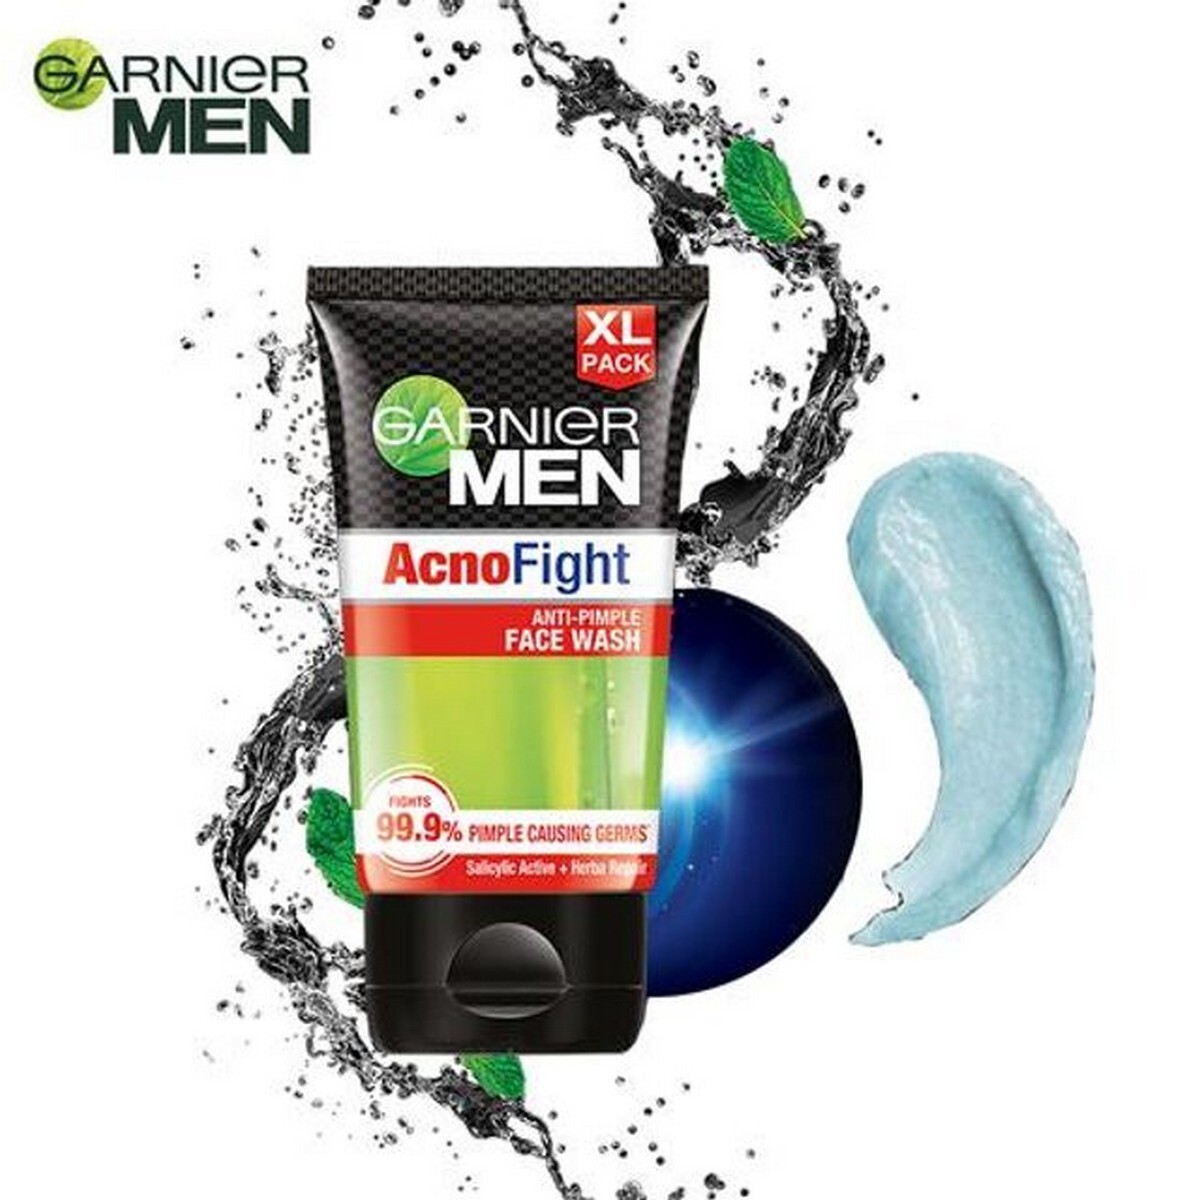 Garnier Men Acno Fight Anti-Pimple Facewash, 150 Ml